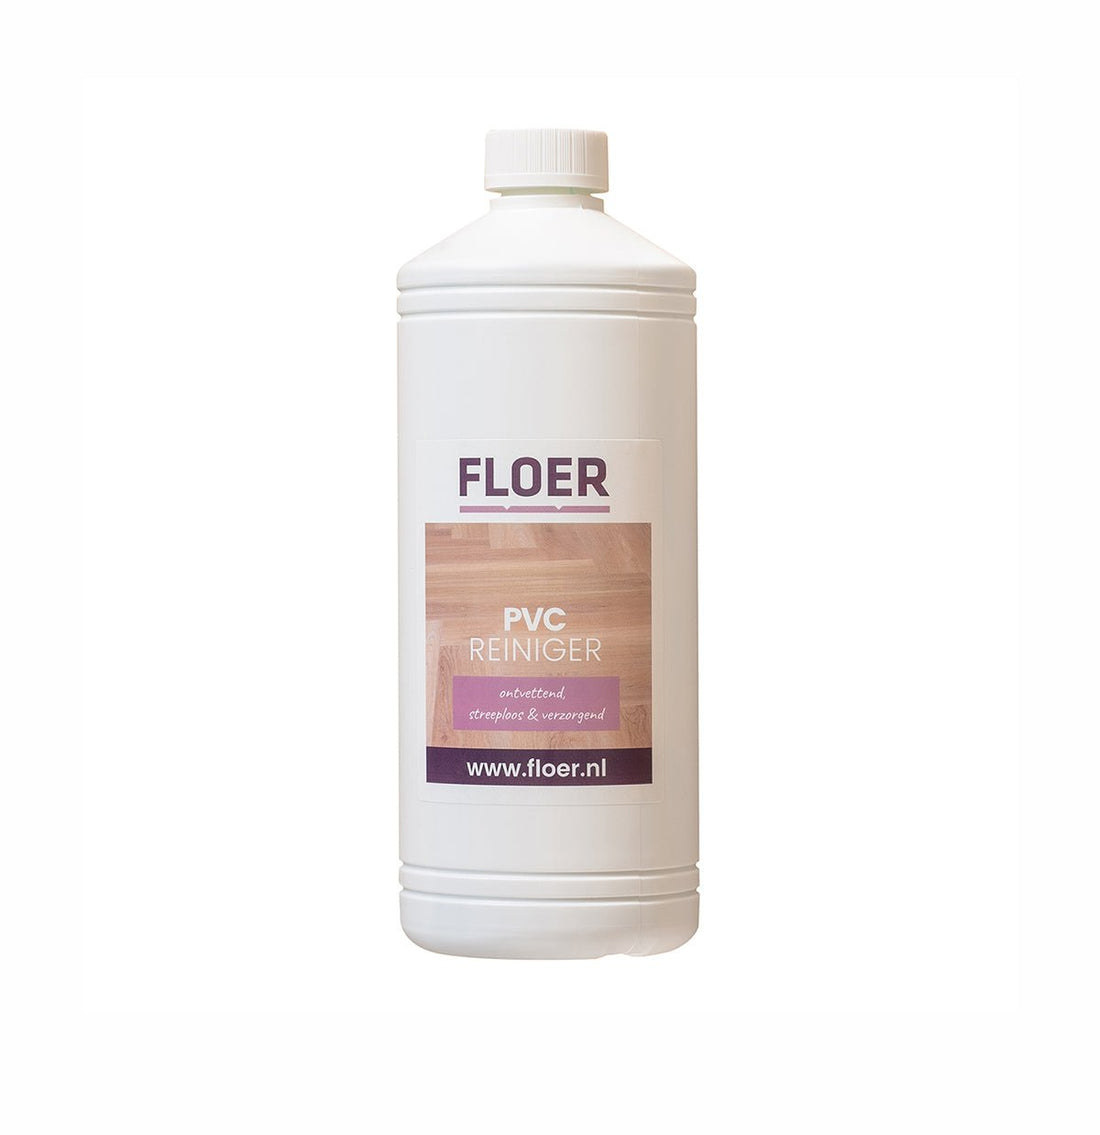 Floer nettoyant PVC 1000ml - Solza